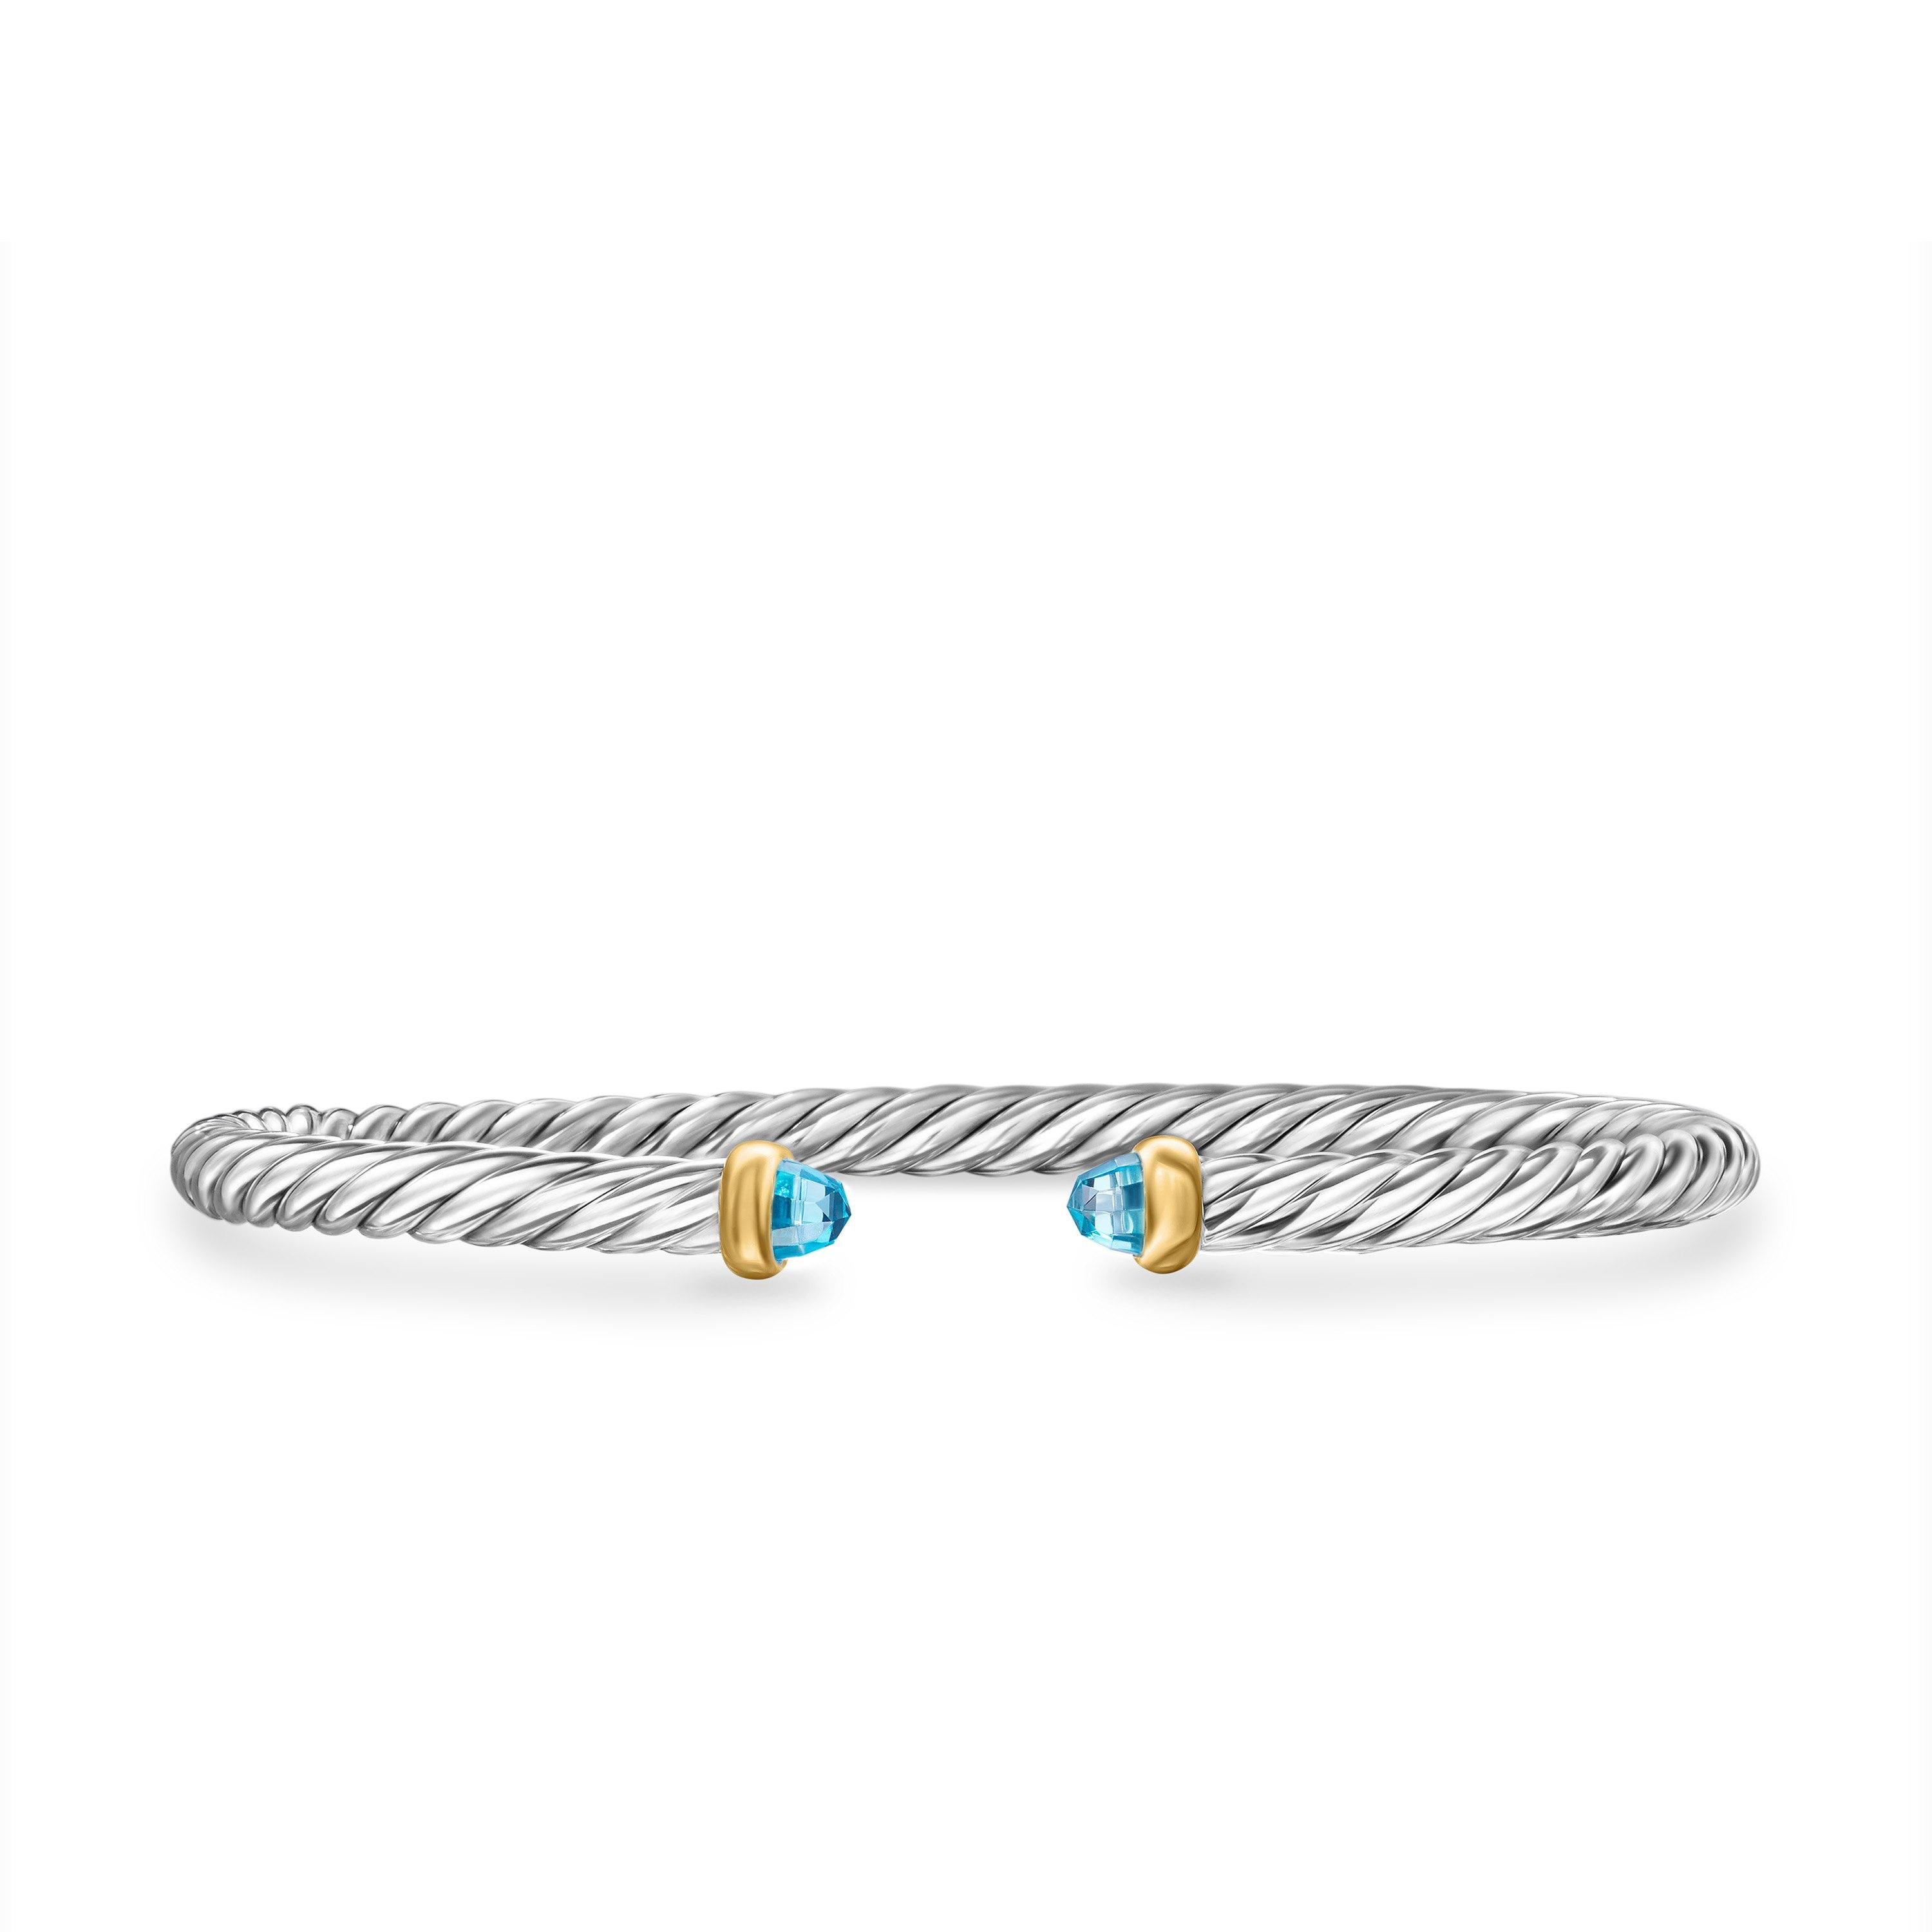 David Yurman Cable Flex Sterling Silver Bracelet with Blue Topaz, Size Large